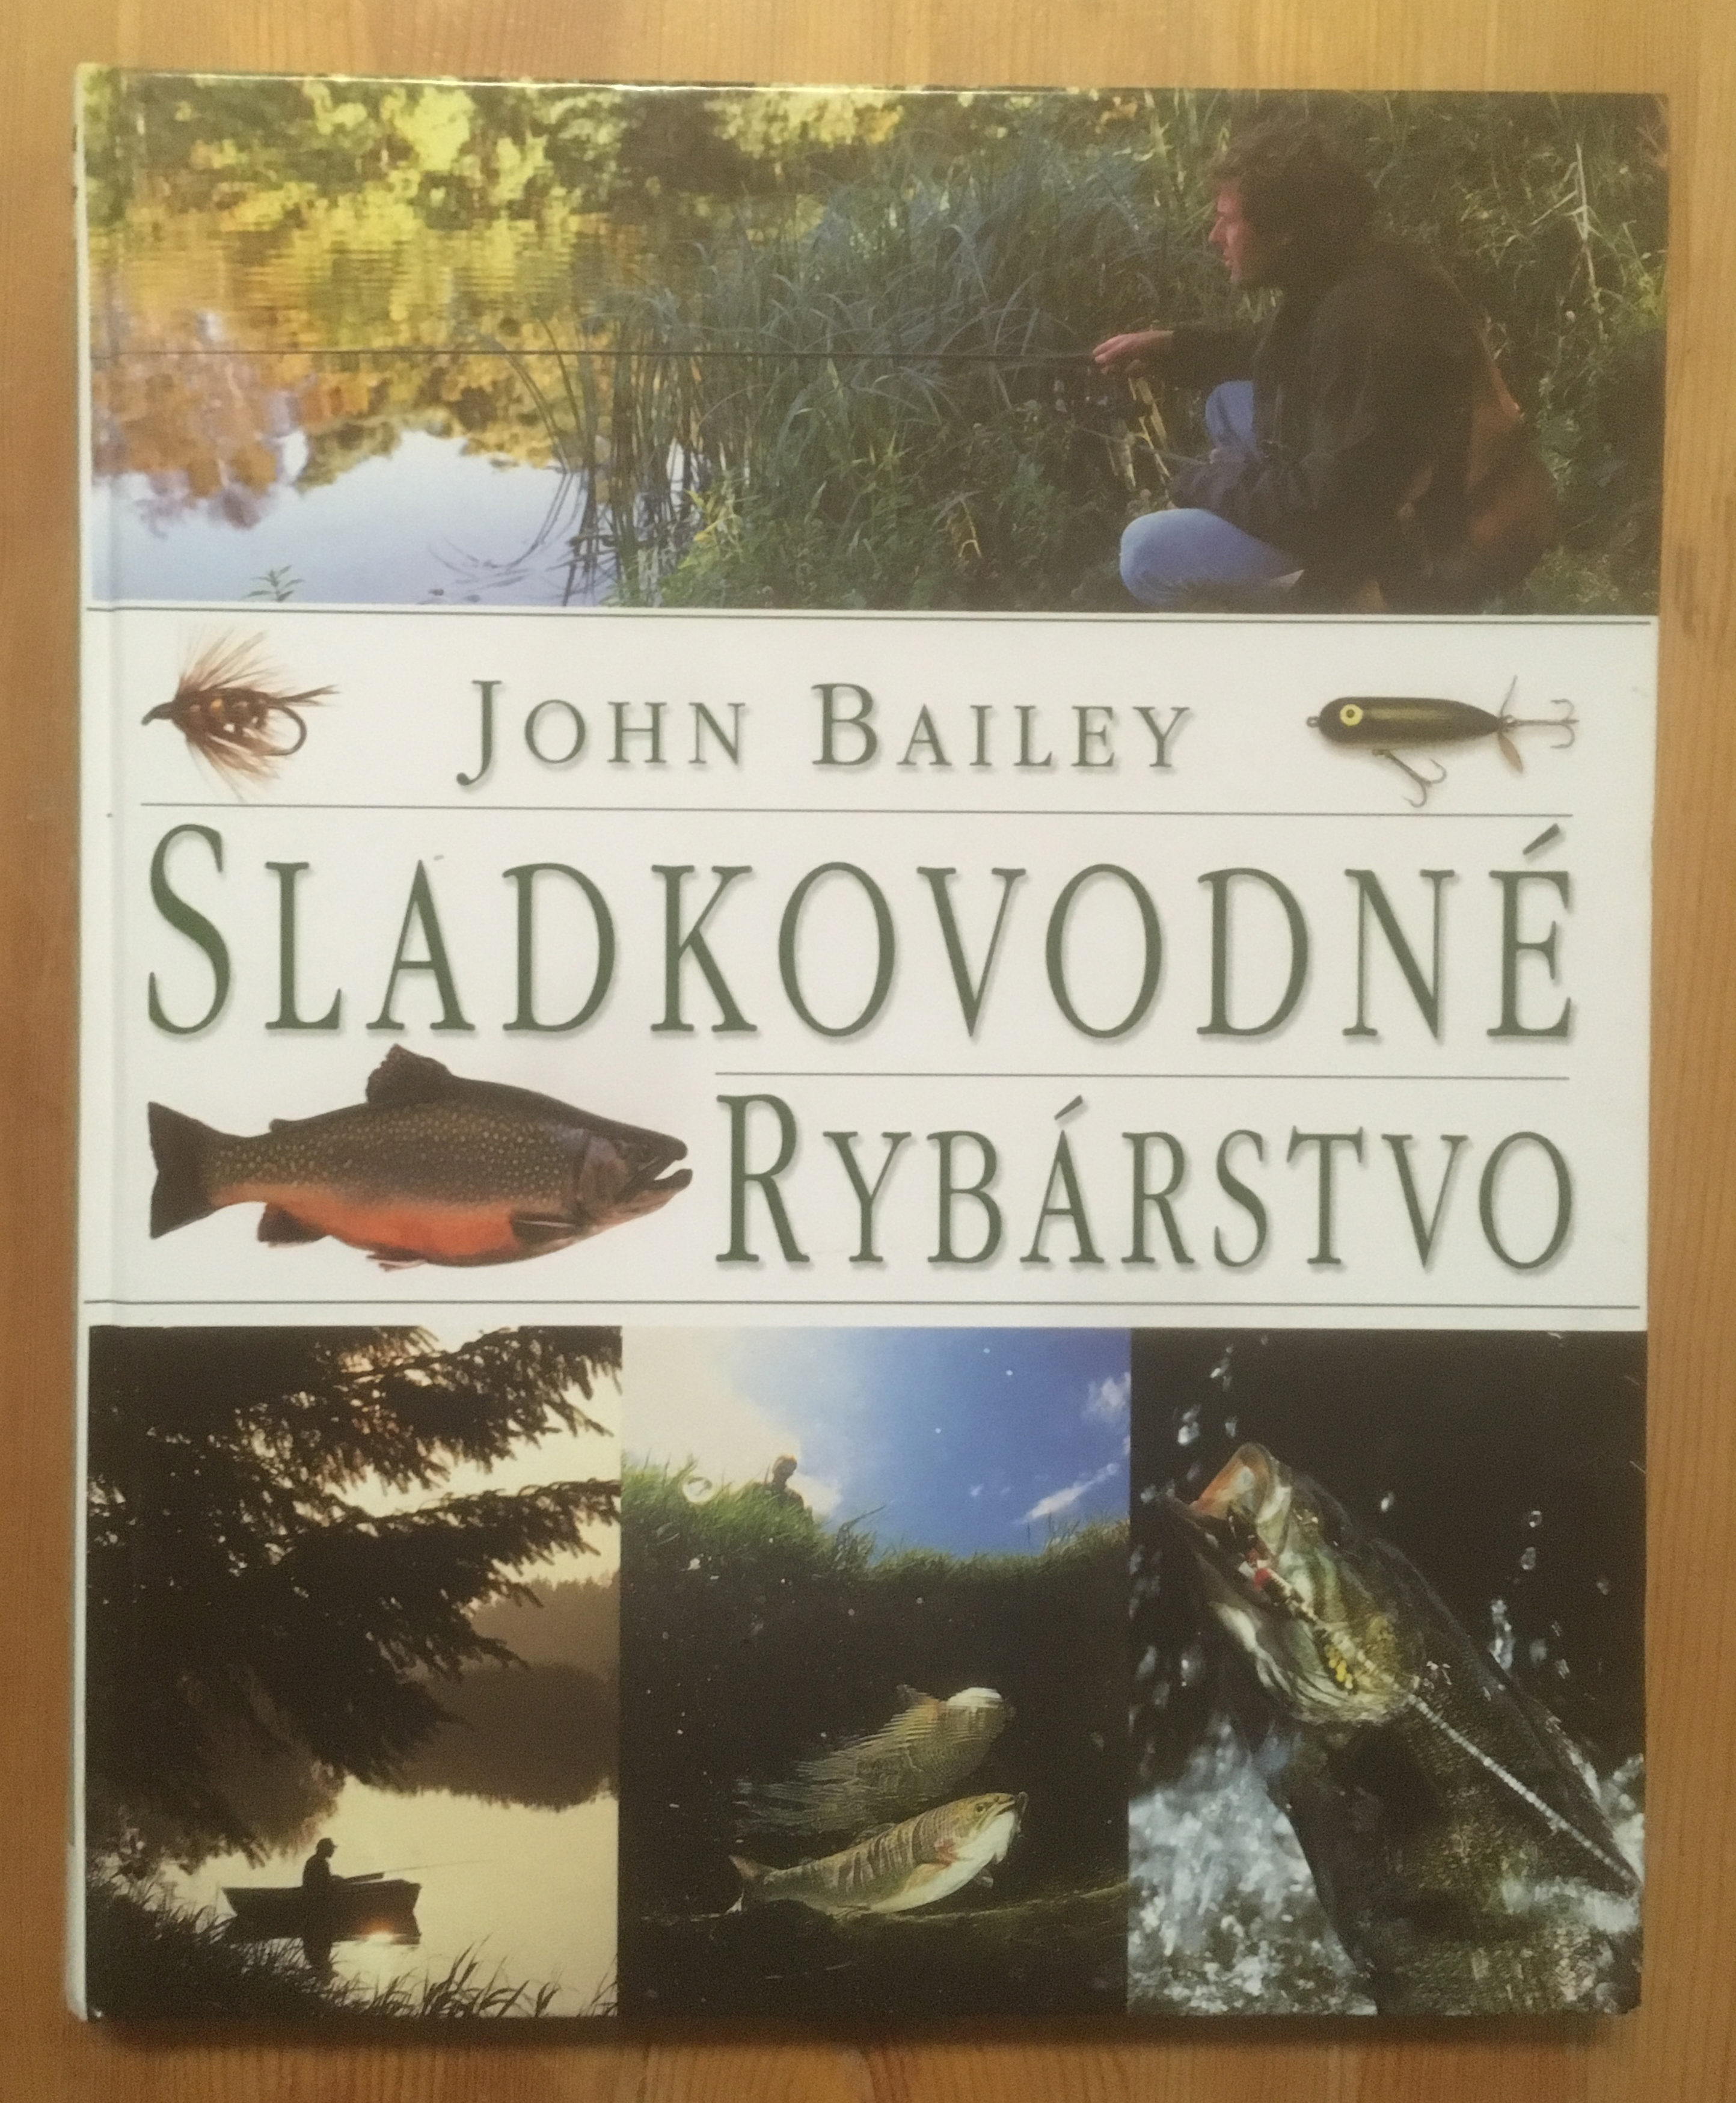 Sladkovodné rybárstvo (John Bailey)